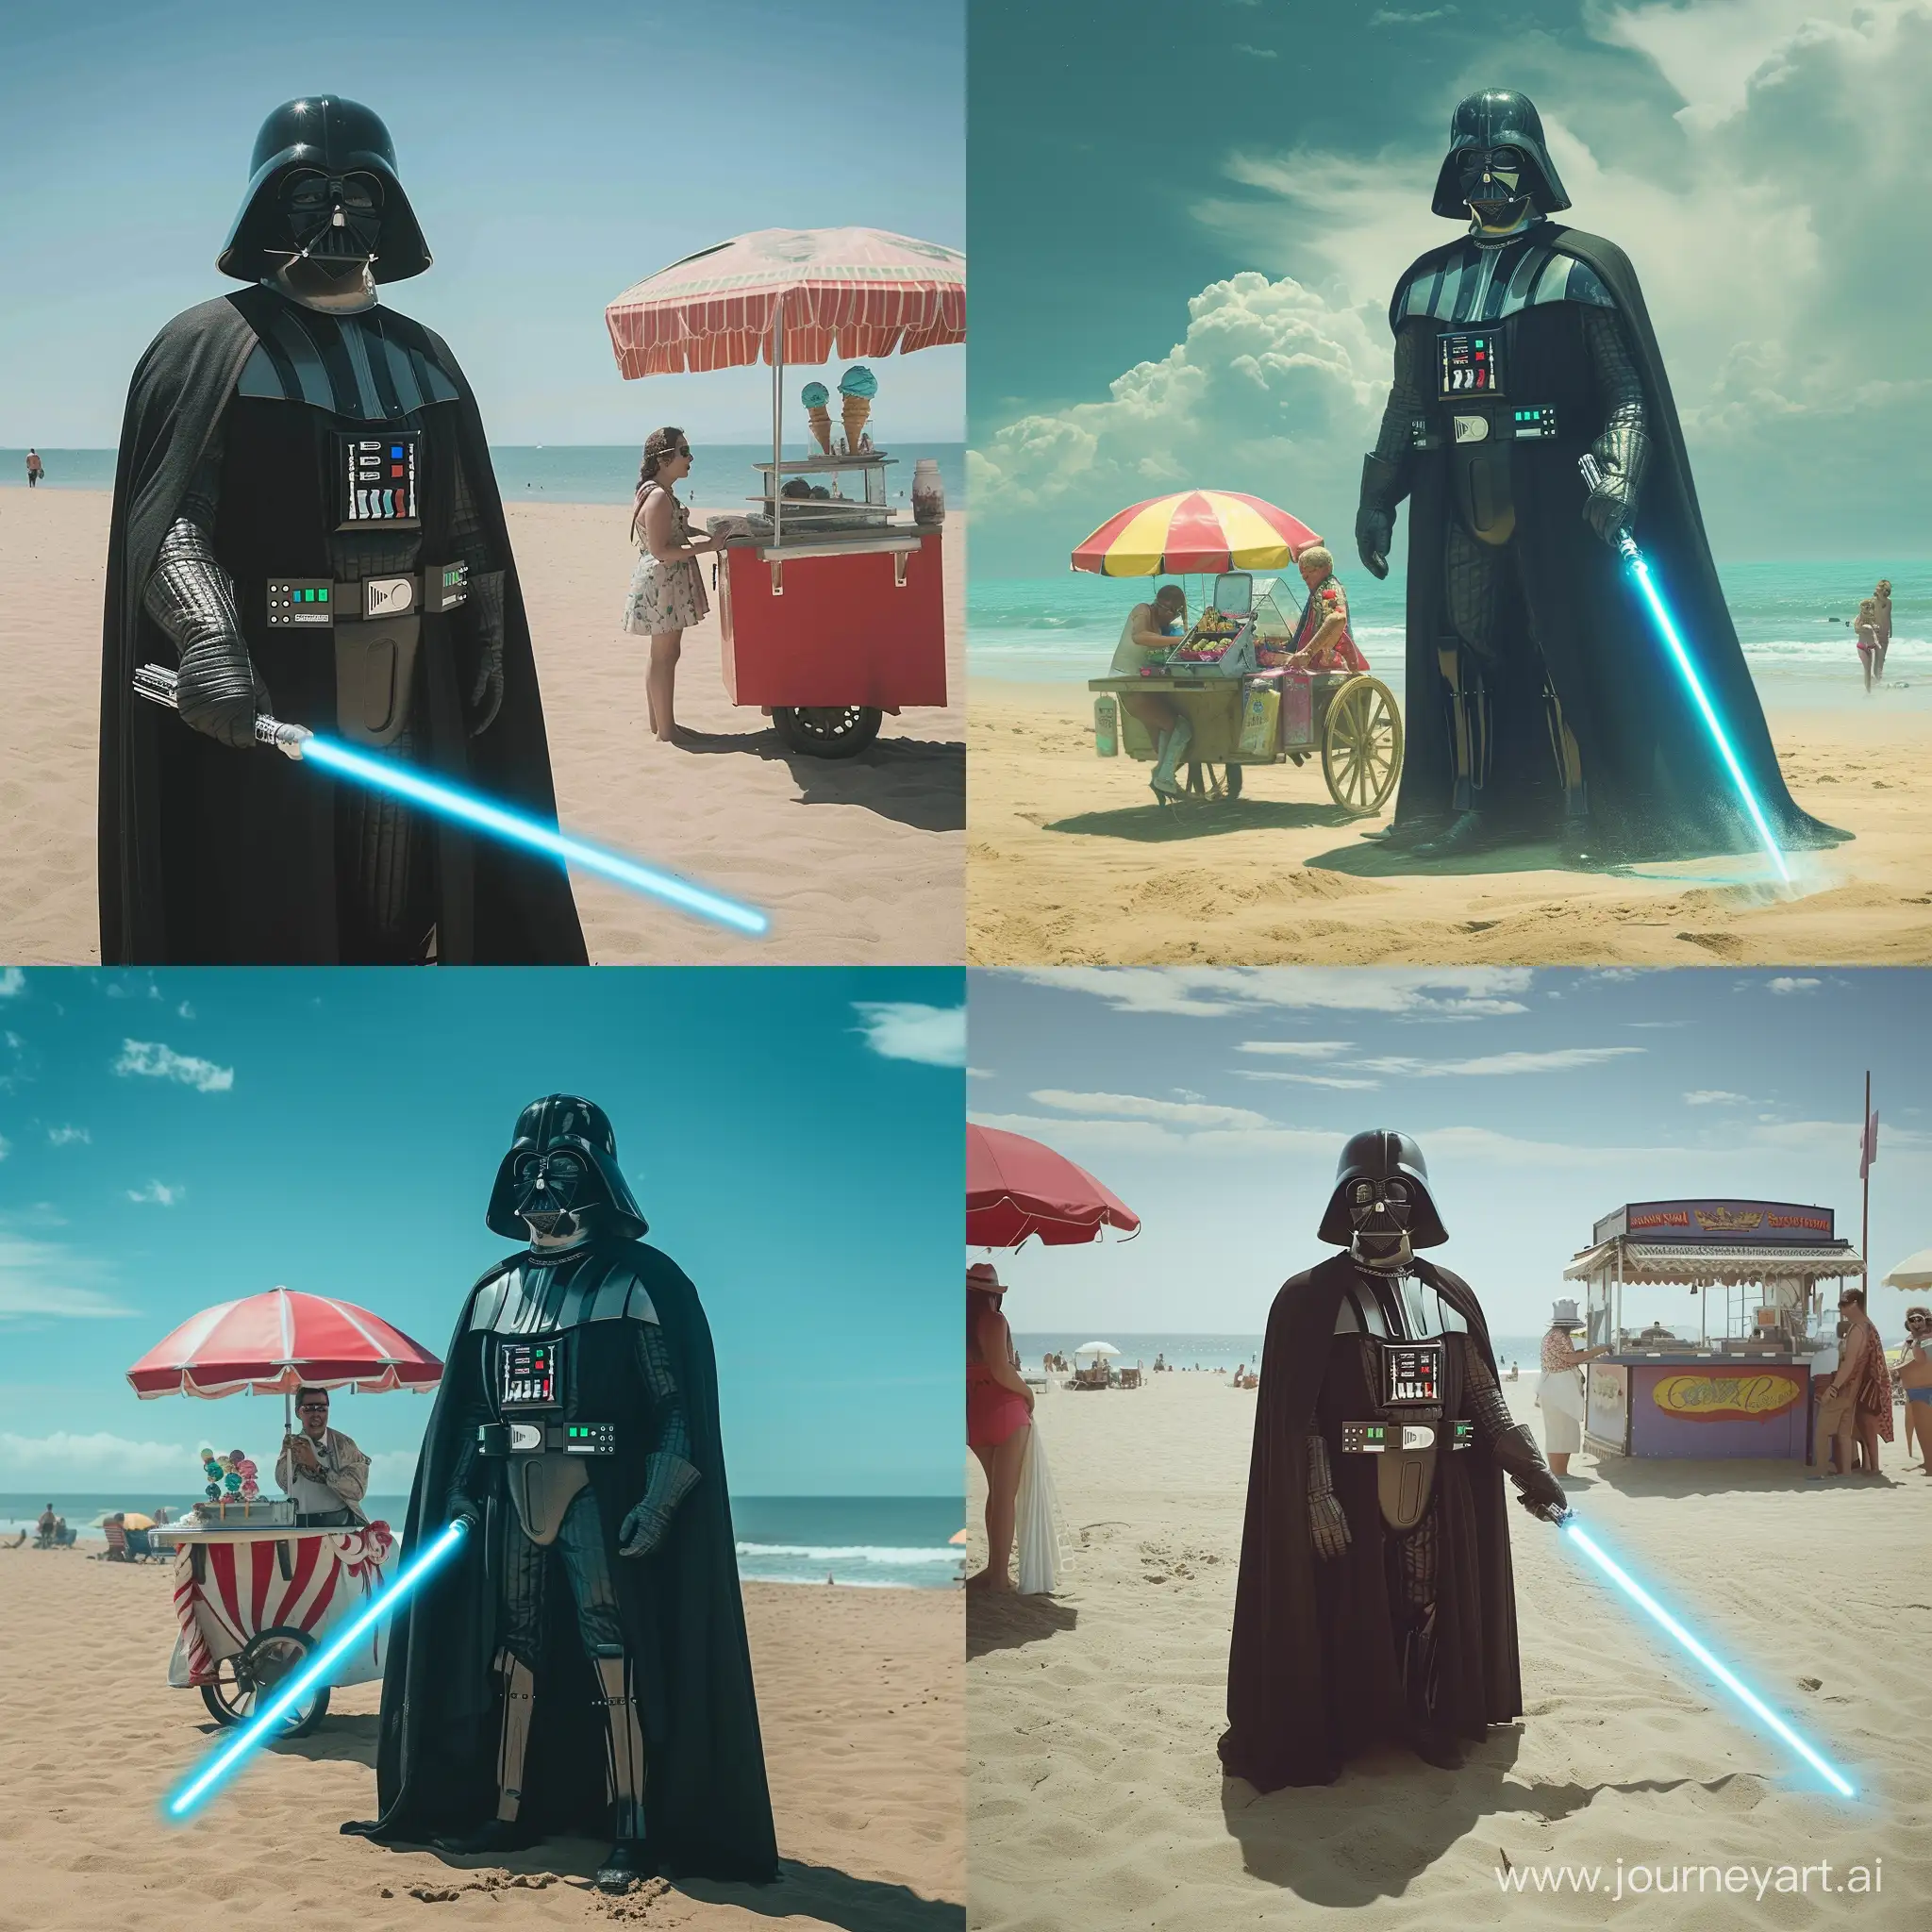 Dark-Vader-Enjoying-Blue-Lightsaber-Fun-on-Beach-with-Ice-Cream-Vendor